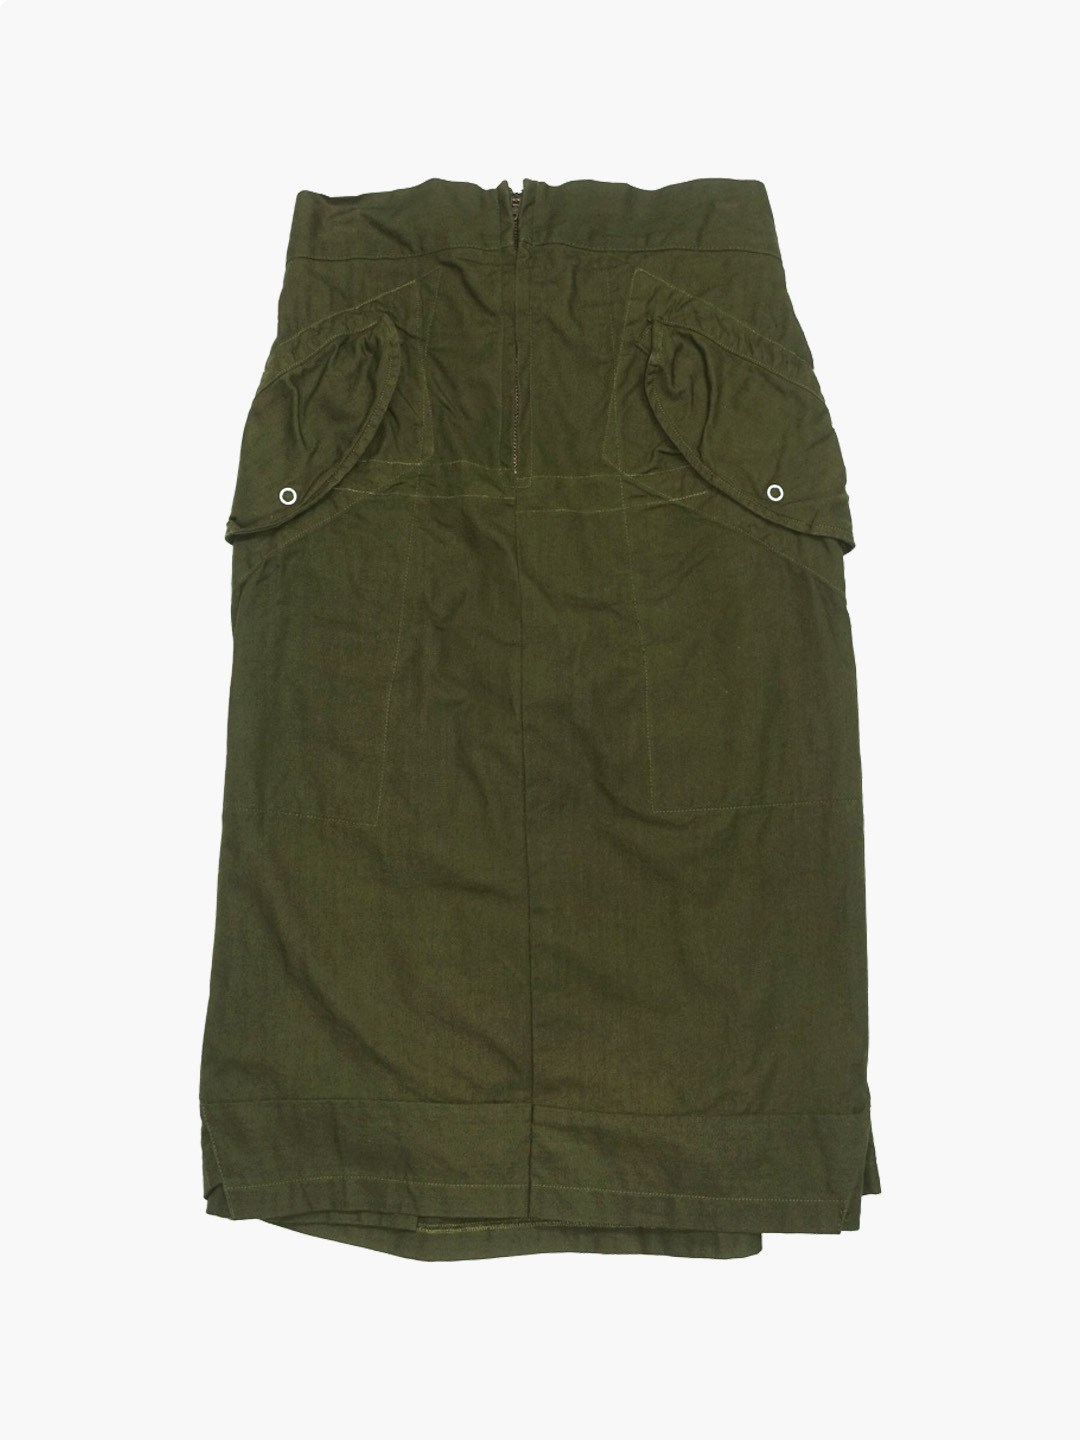 77CIRCAMilitary skirt